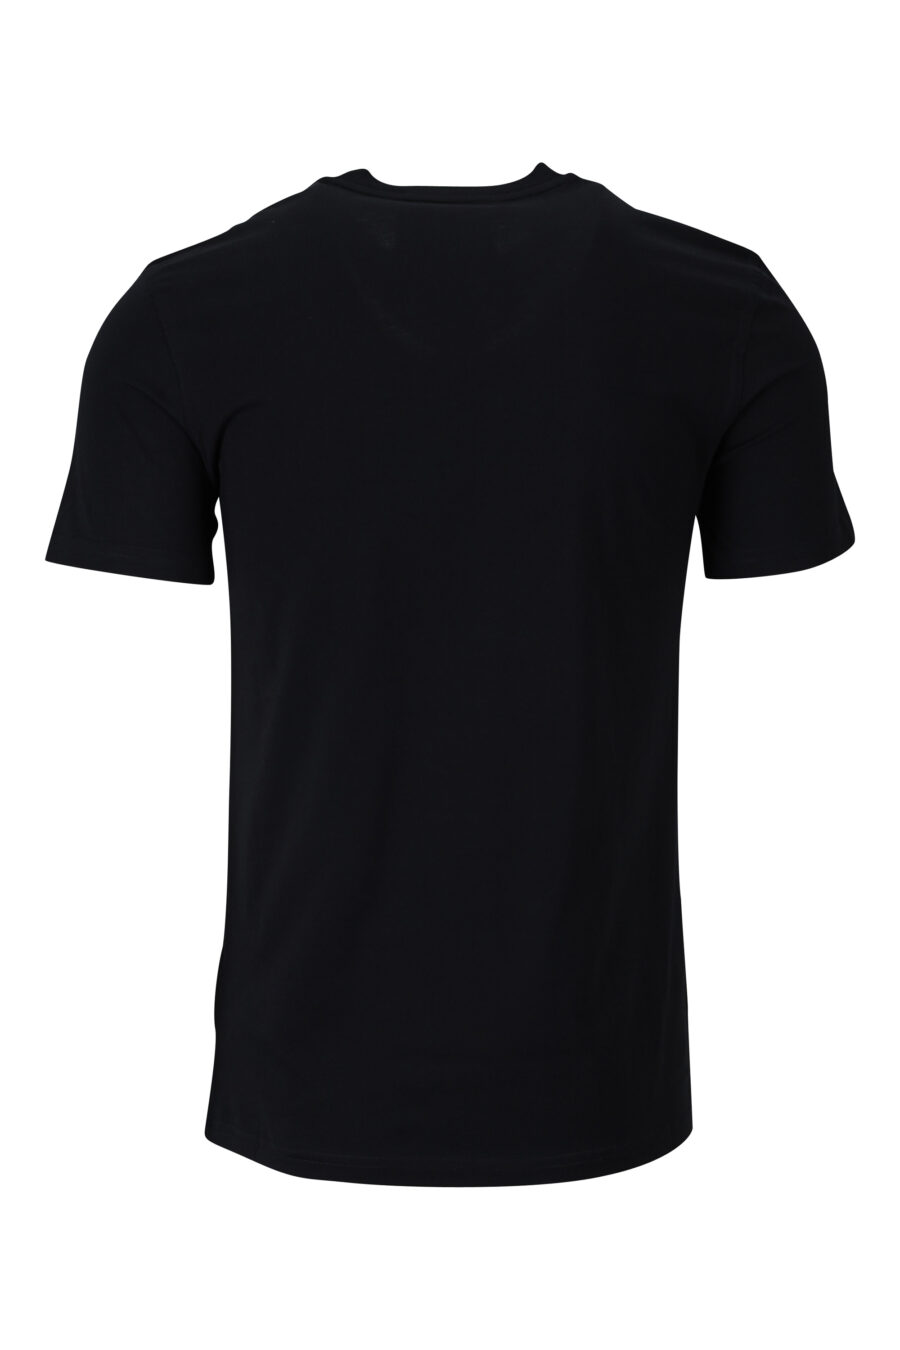 Black organic cotton T-shirt with "teddy" maxilogo - 889316854589 1